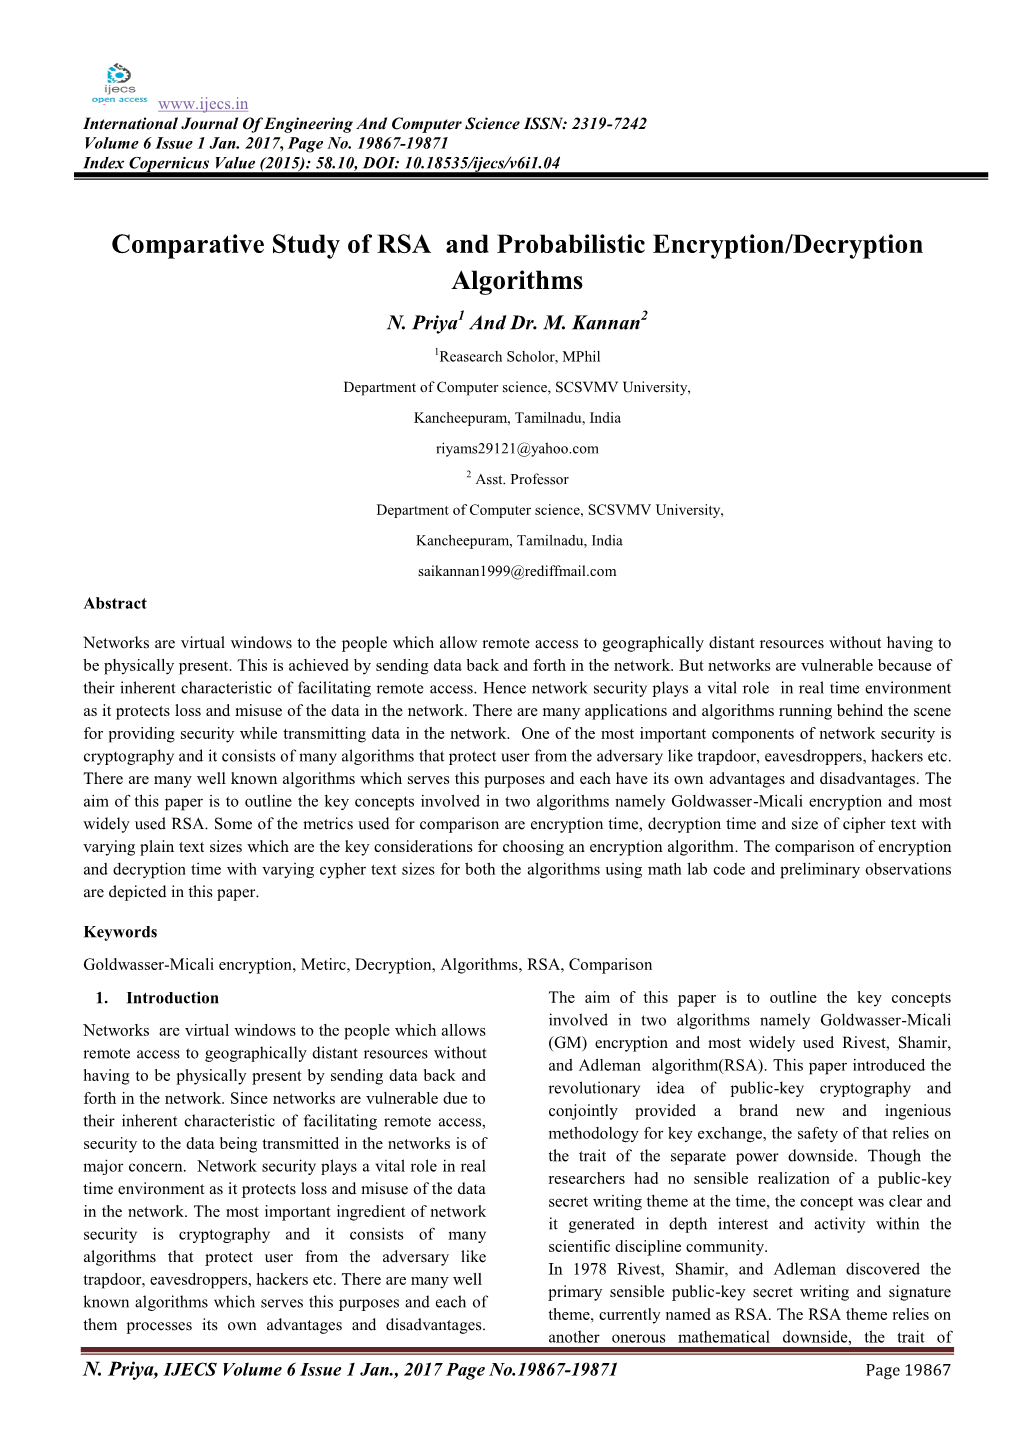 Comparative Study of RSA and Probabilistic Encryption/Decryption Algorithms N